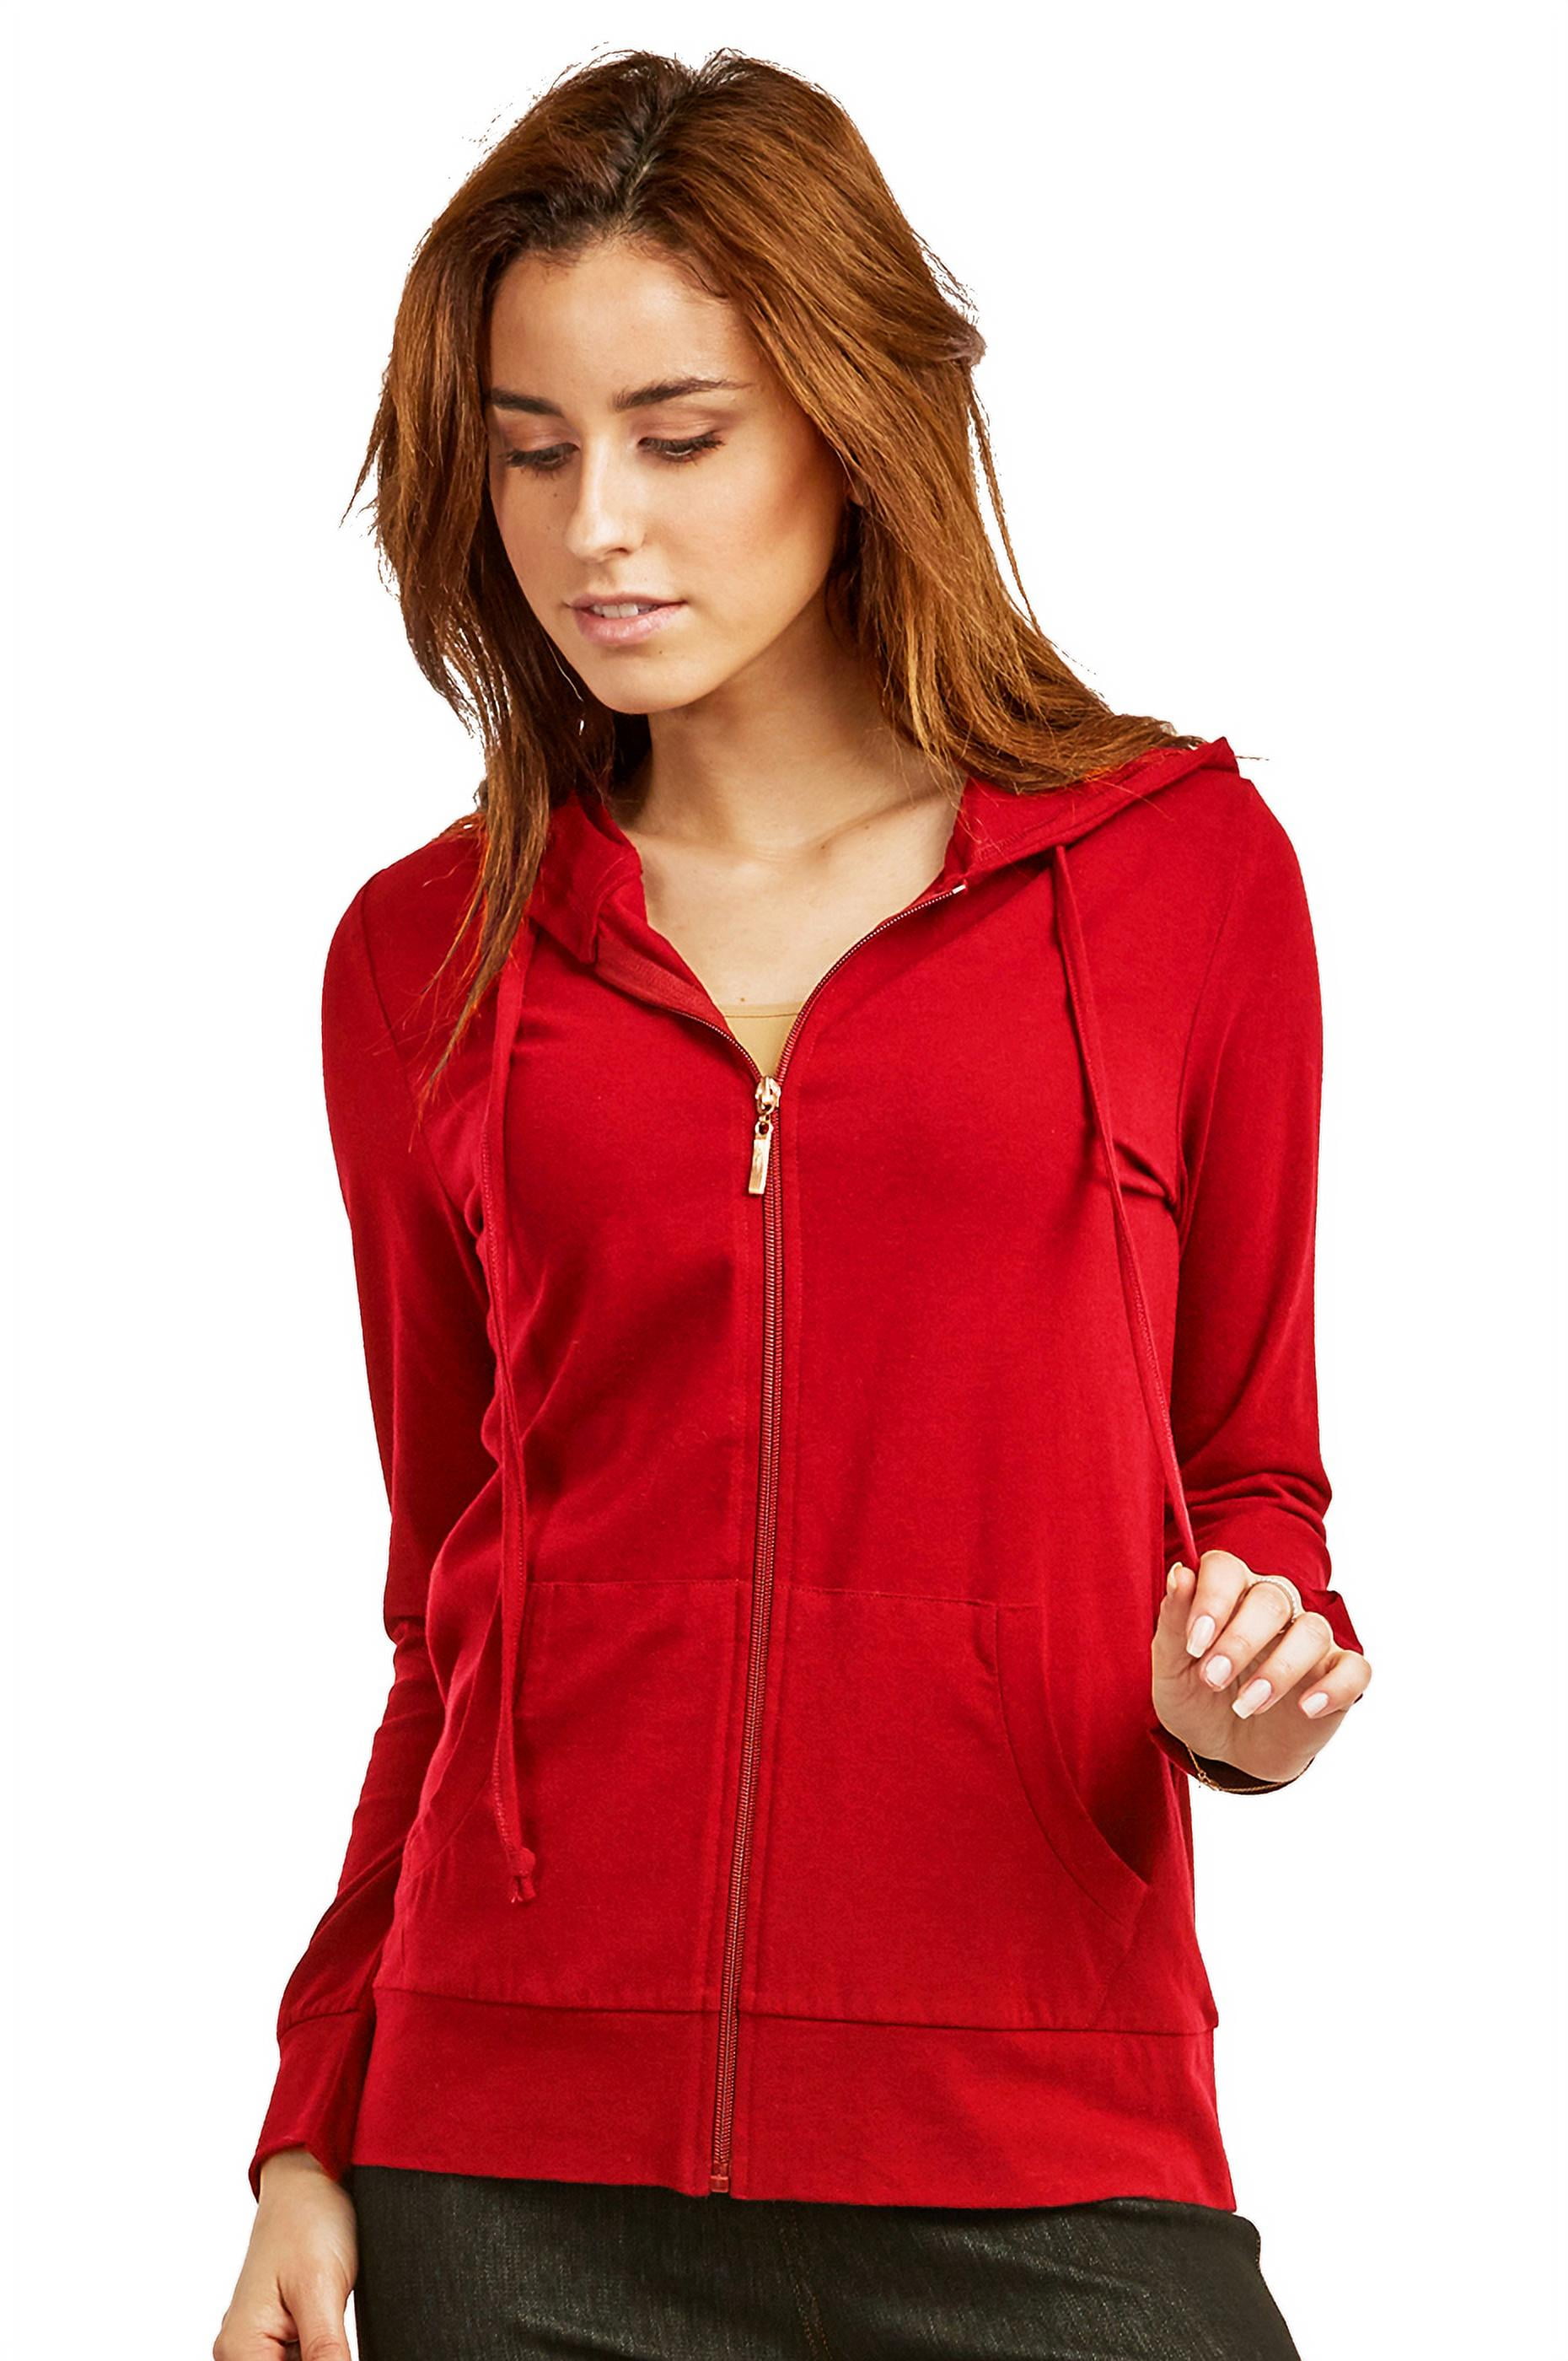 Women's Thin Cotton Zip Up Hoodie Jacket (M, Red) - Walmart.com